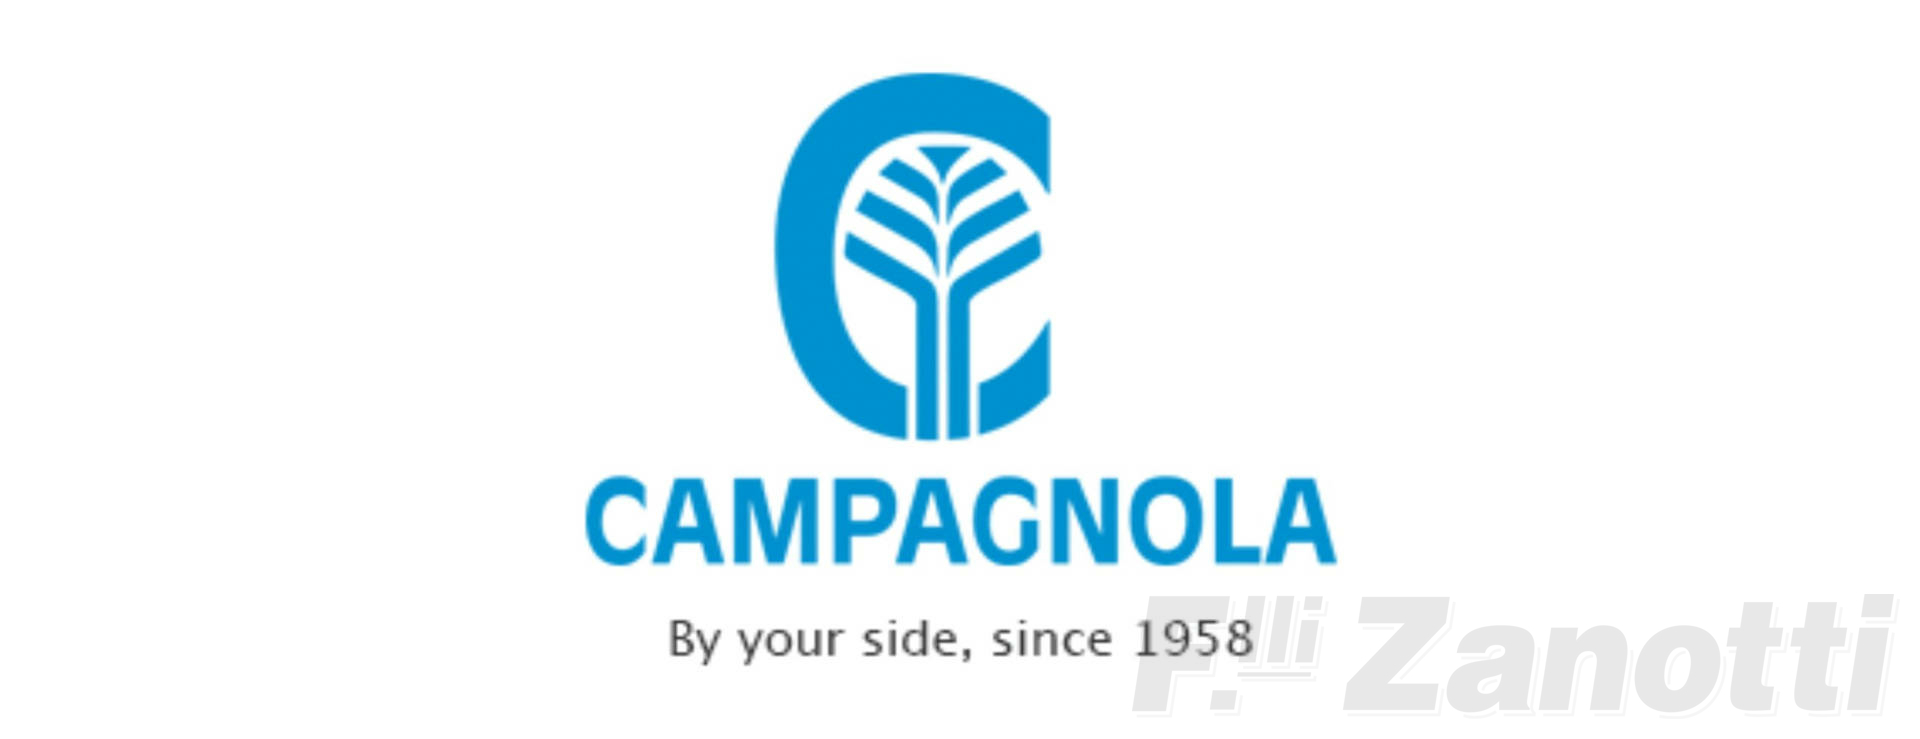 campagnola-scaled.jpg